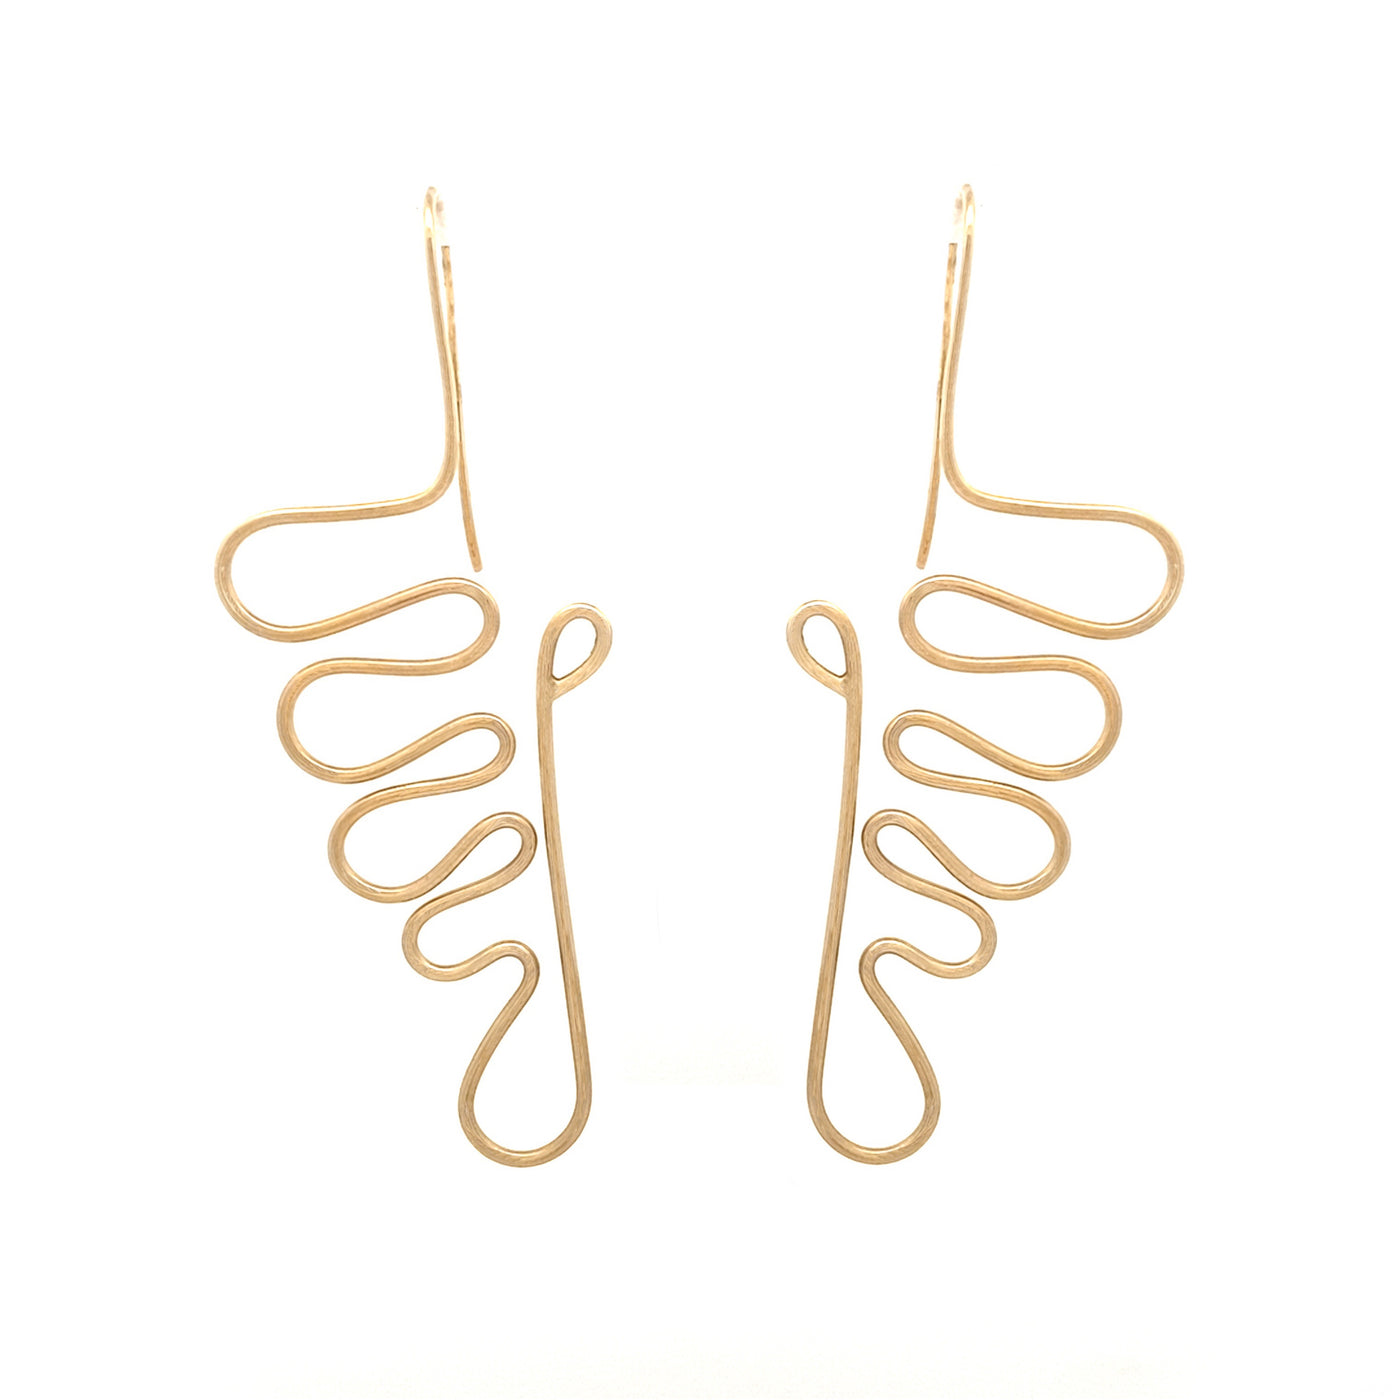 Contemporary Handmade Twirl Earrings in Gold